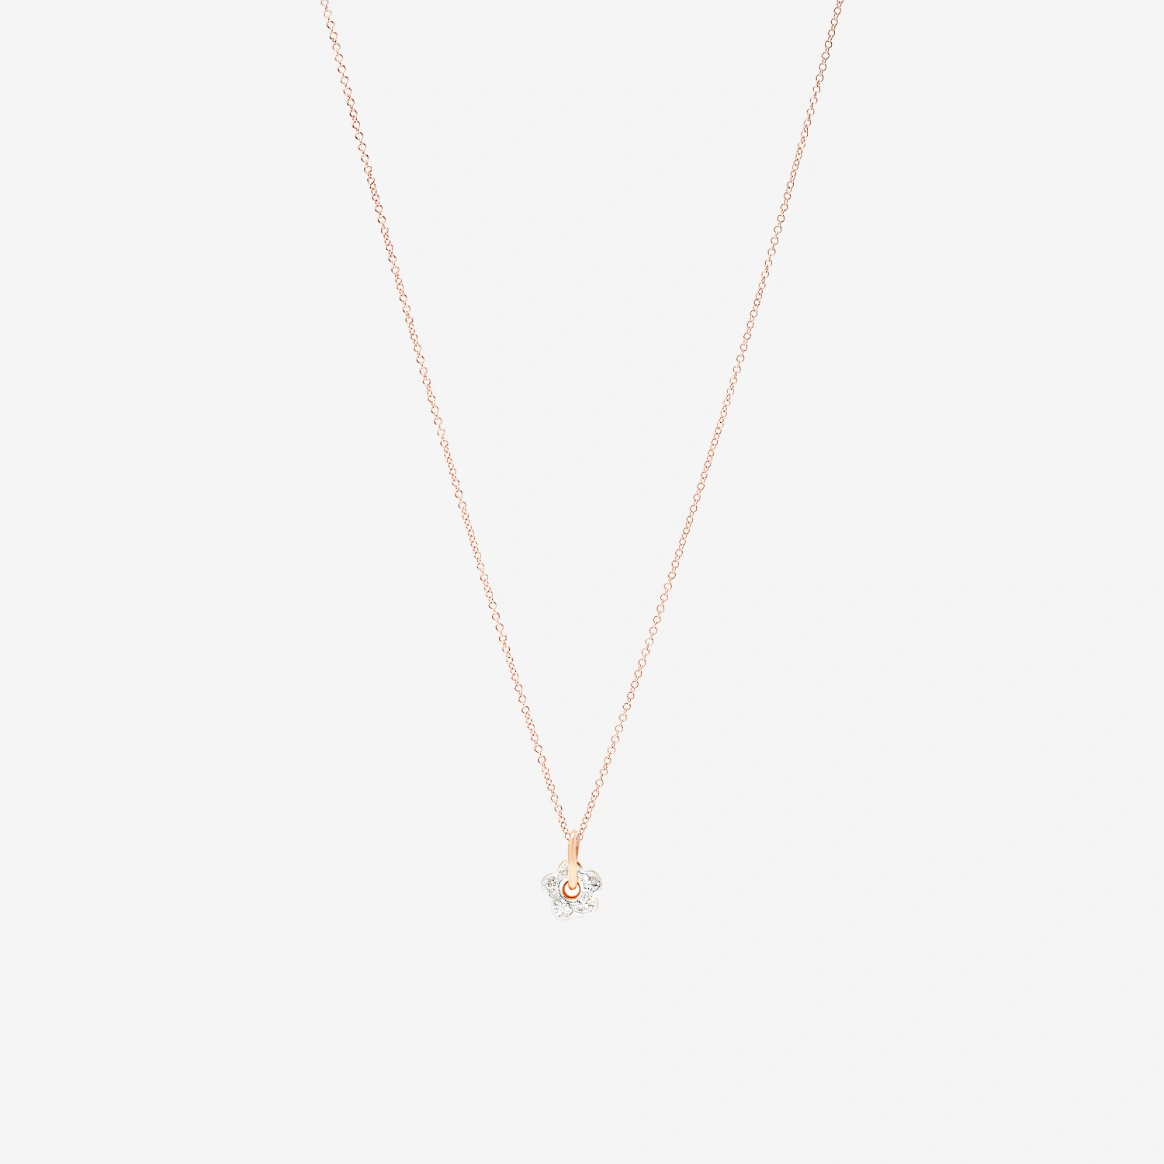 Dodo Flower Charm in 9k Rose Gold with Diamonds - Orsini Jewellers